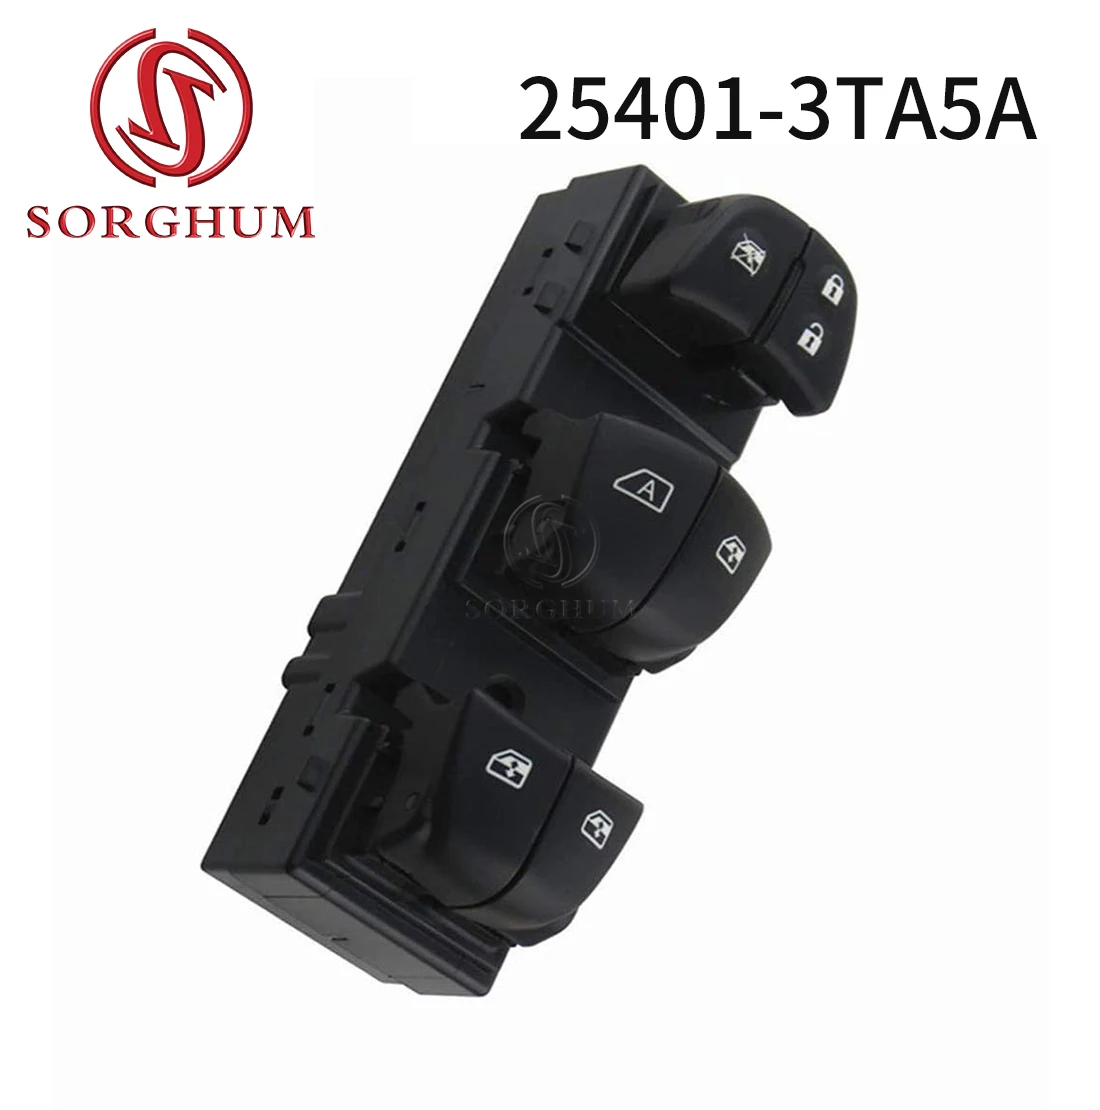 

SORGHUM 25401-3TA5A For 2013-2018 Nissan Altima Sentra Leaf Juke Qashqai Pathfinder Master Window Power Switch Door Lock Button